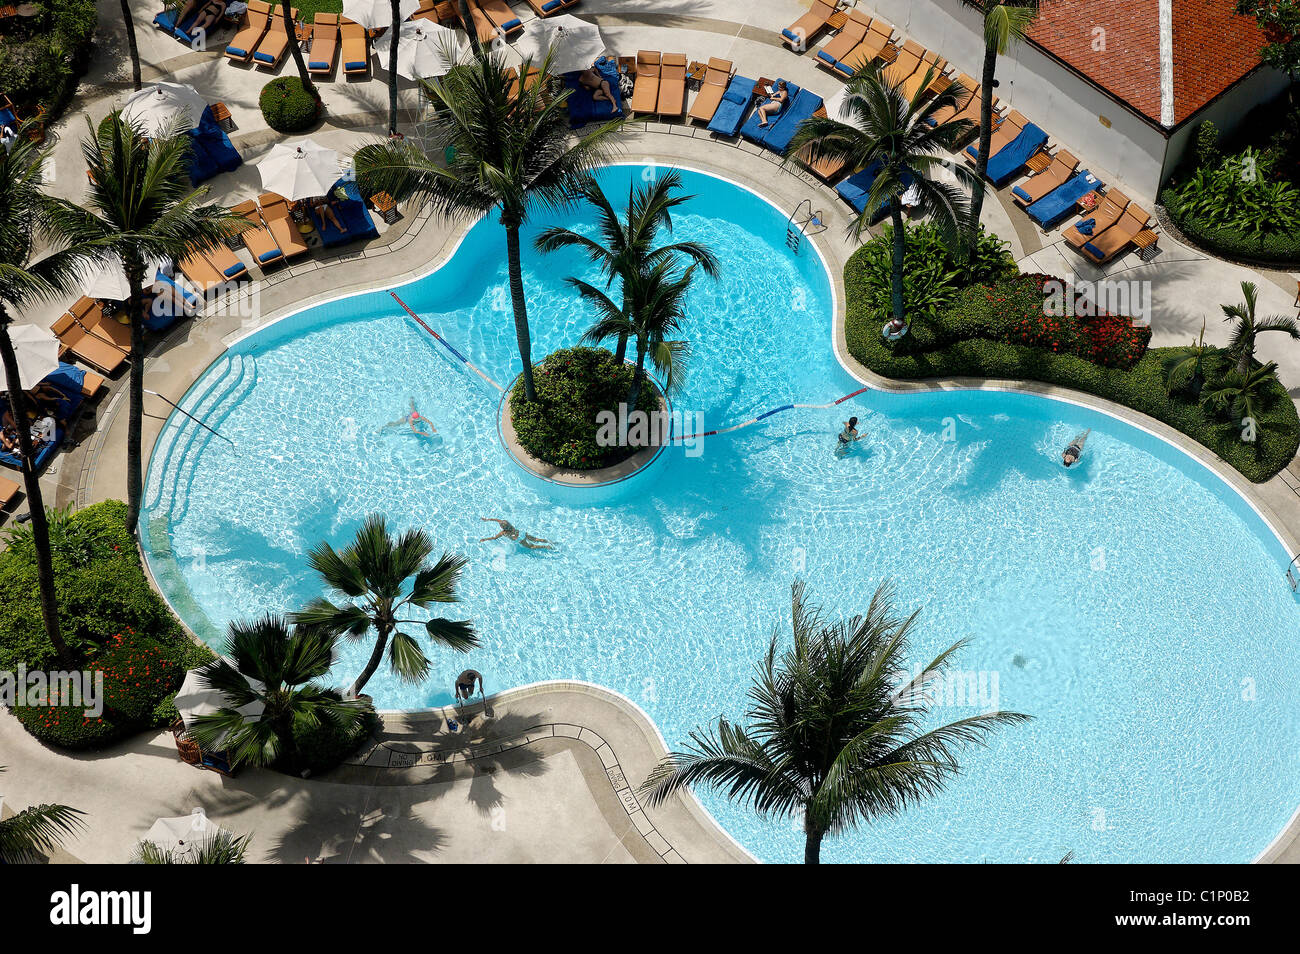 Thailand, Bangkok, Swimmingpool des Shangri-La Hotels Stockfoto